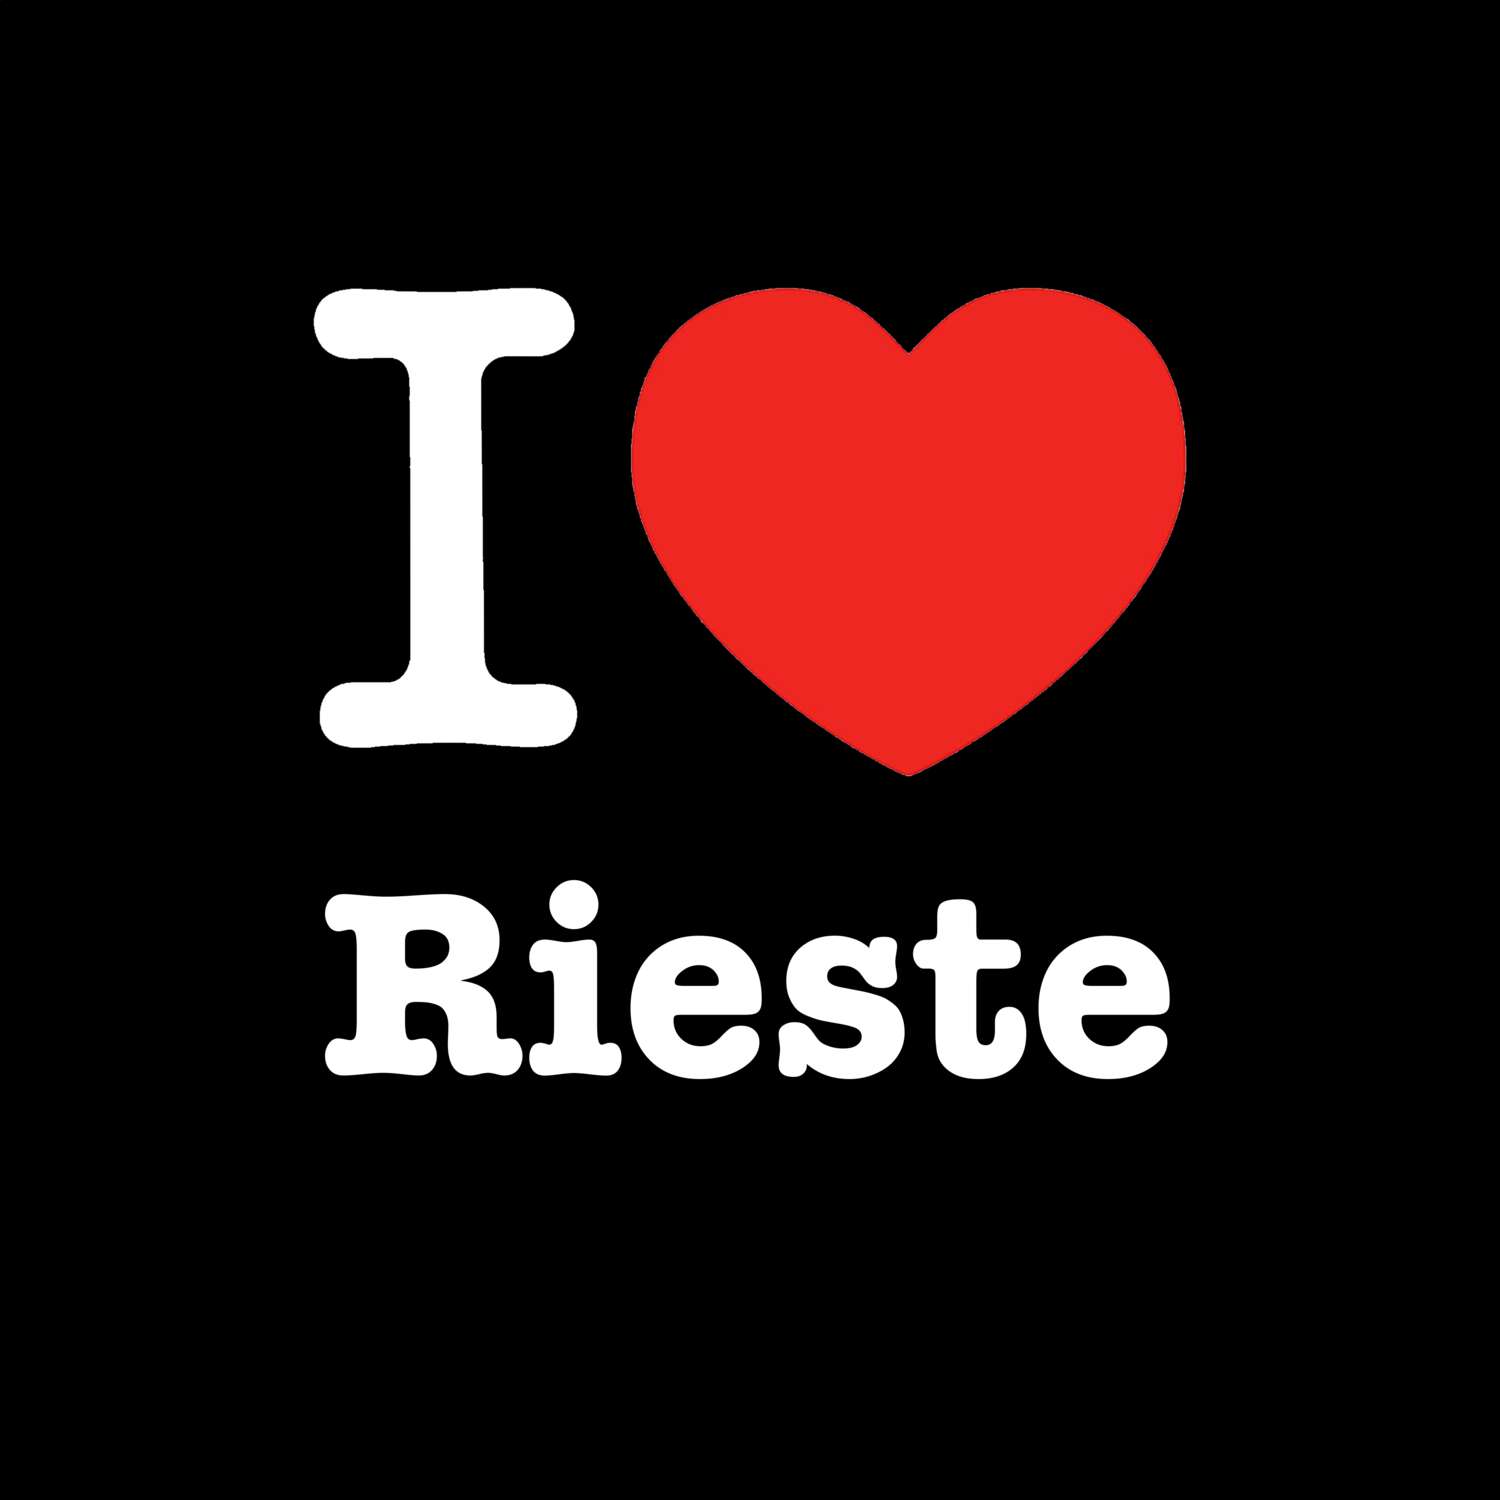 Rieste T-Shirt »I love«